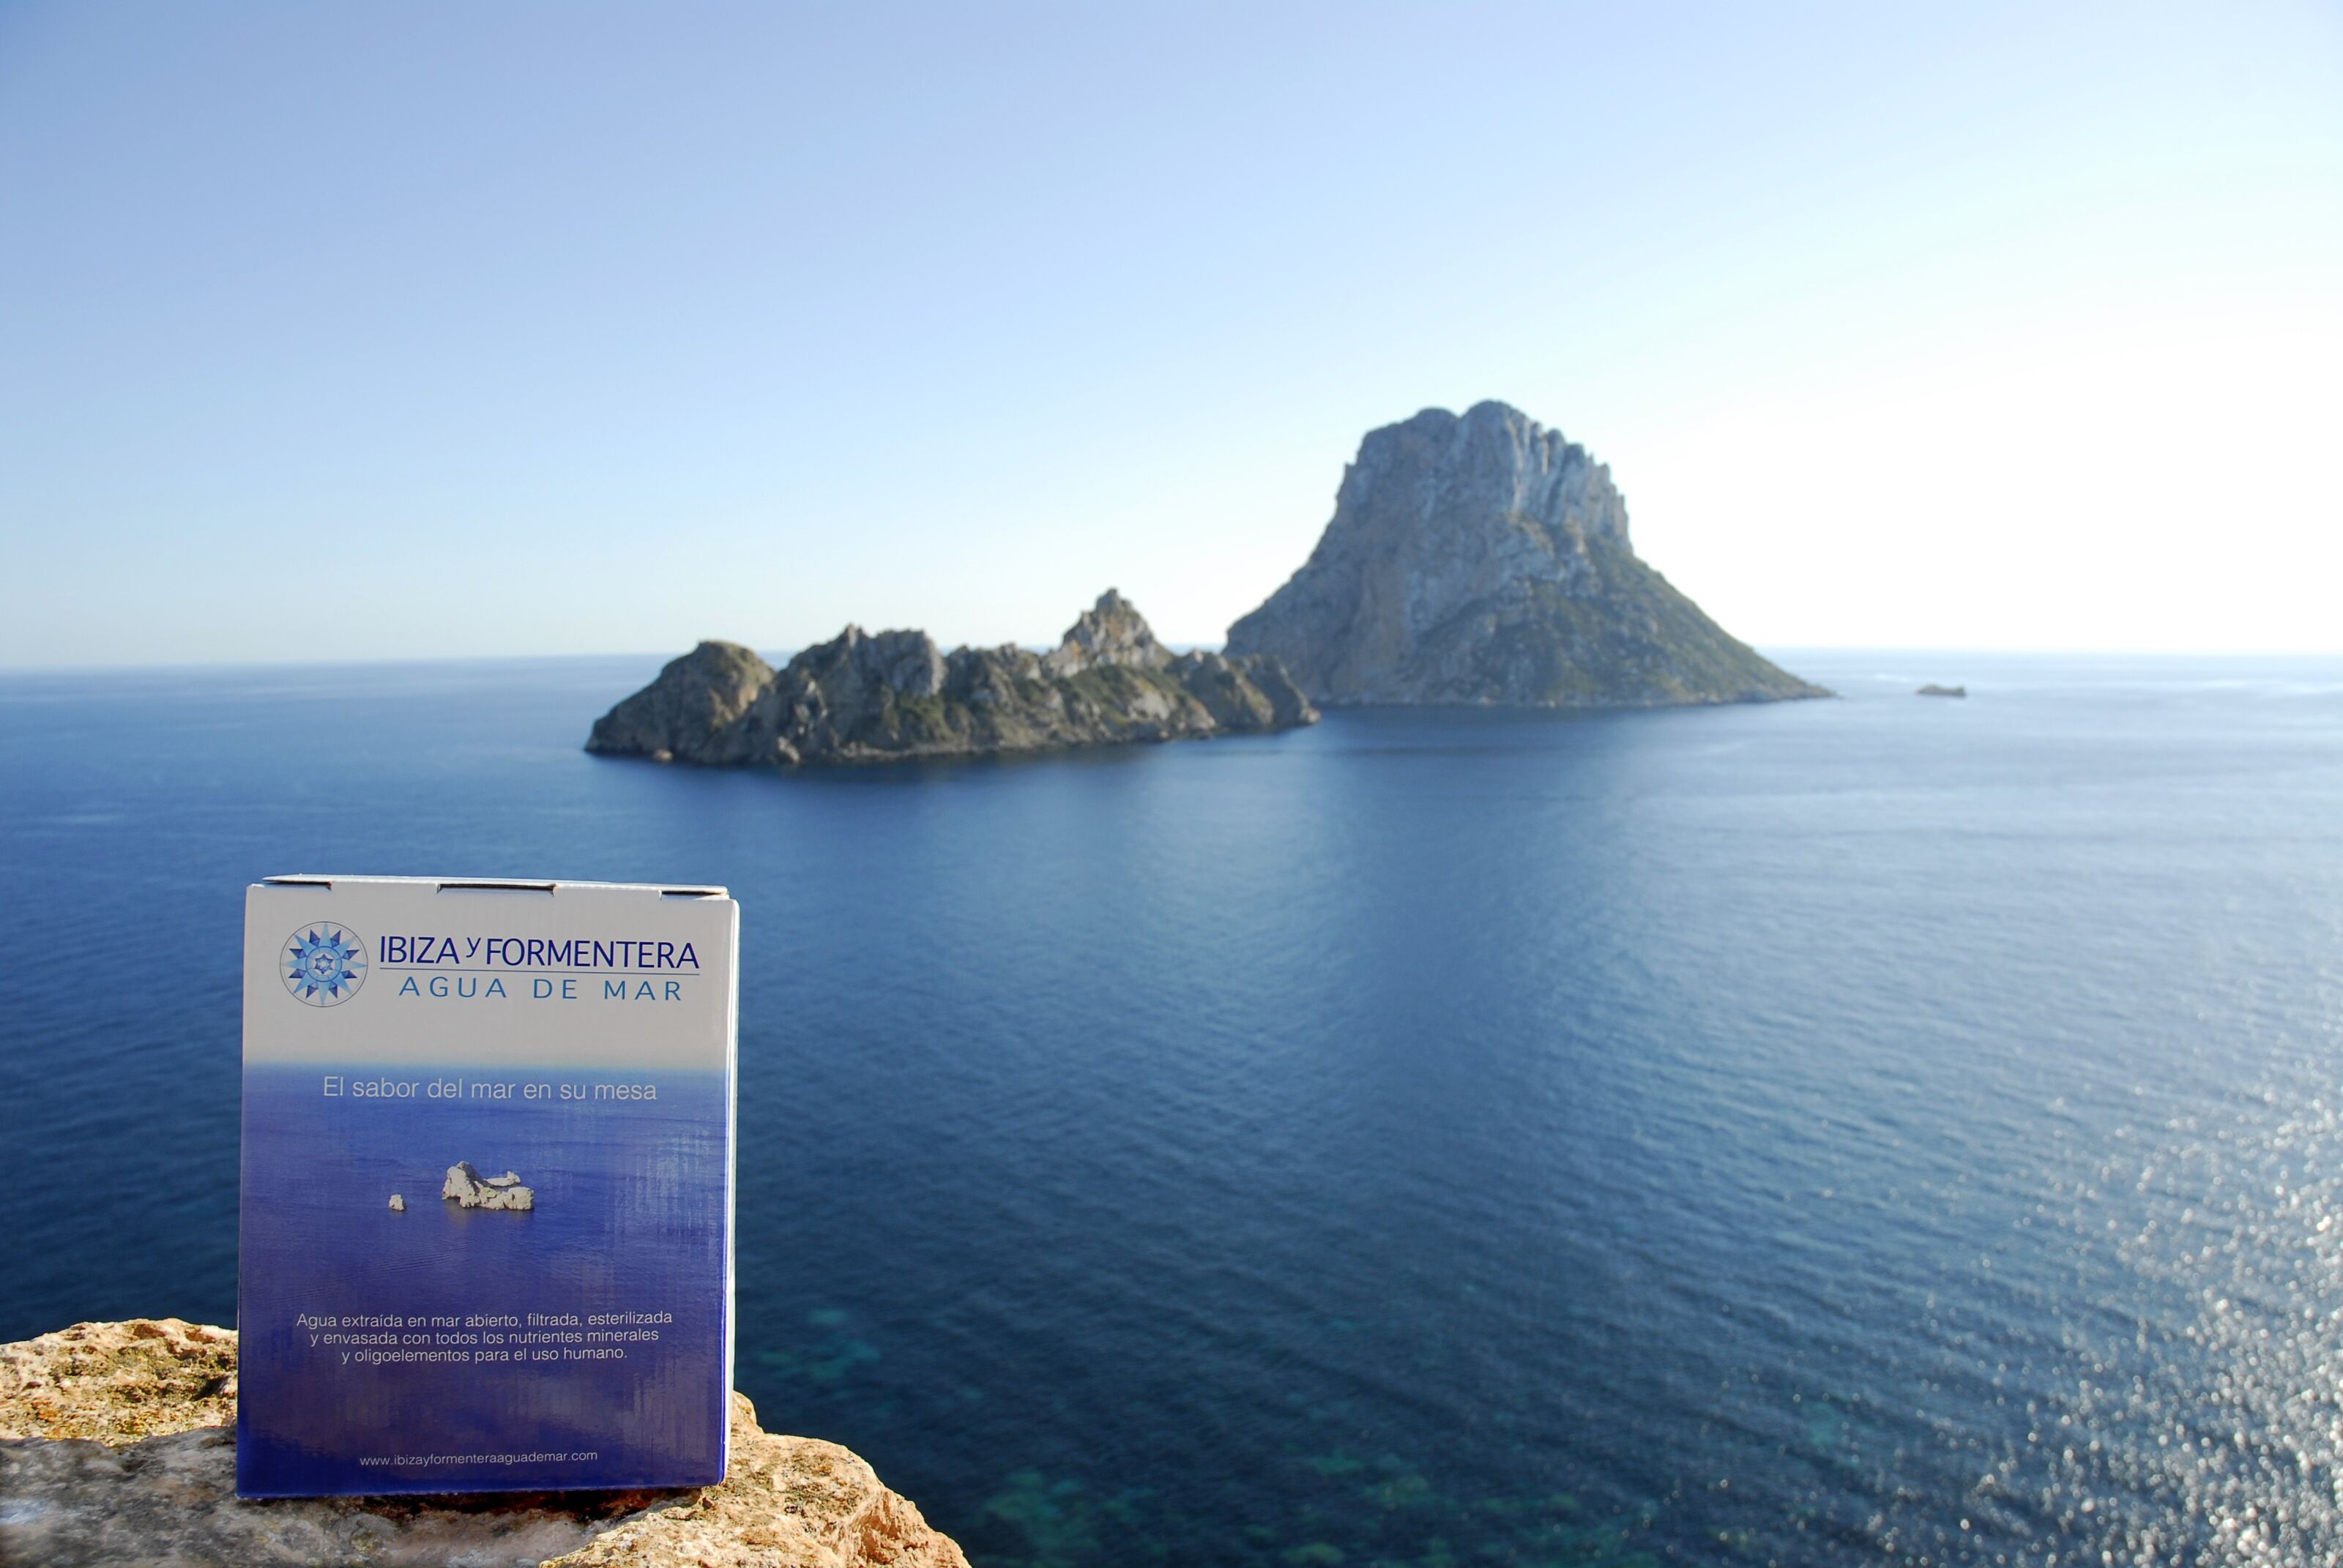 Agua de mar plasma marino 11l Ibiza y Formentera